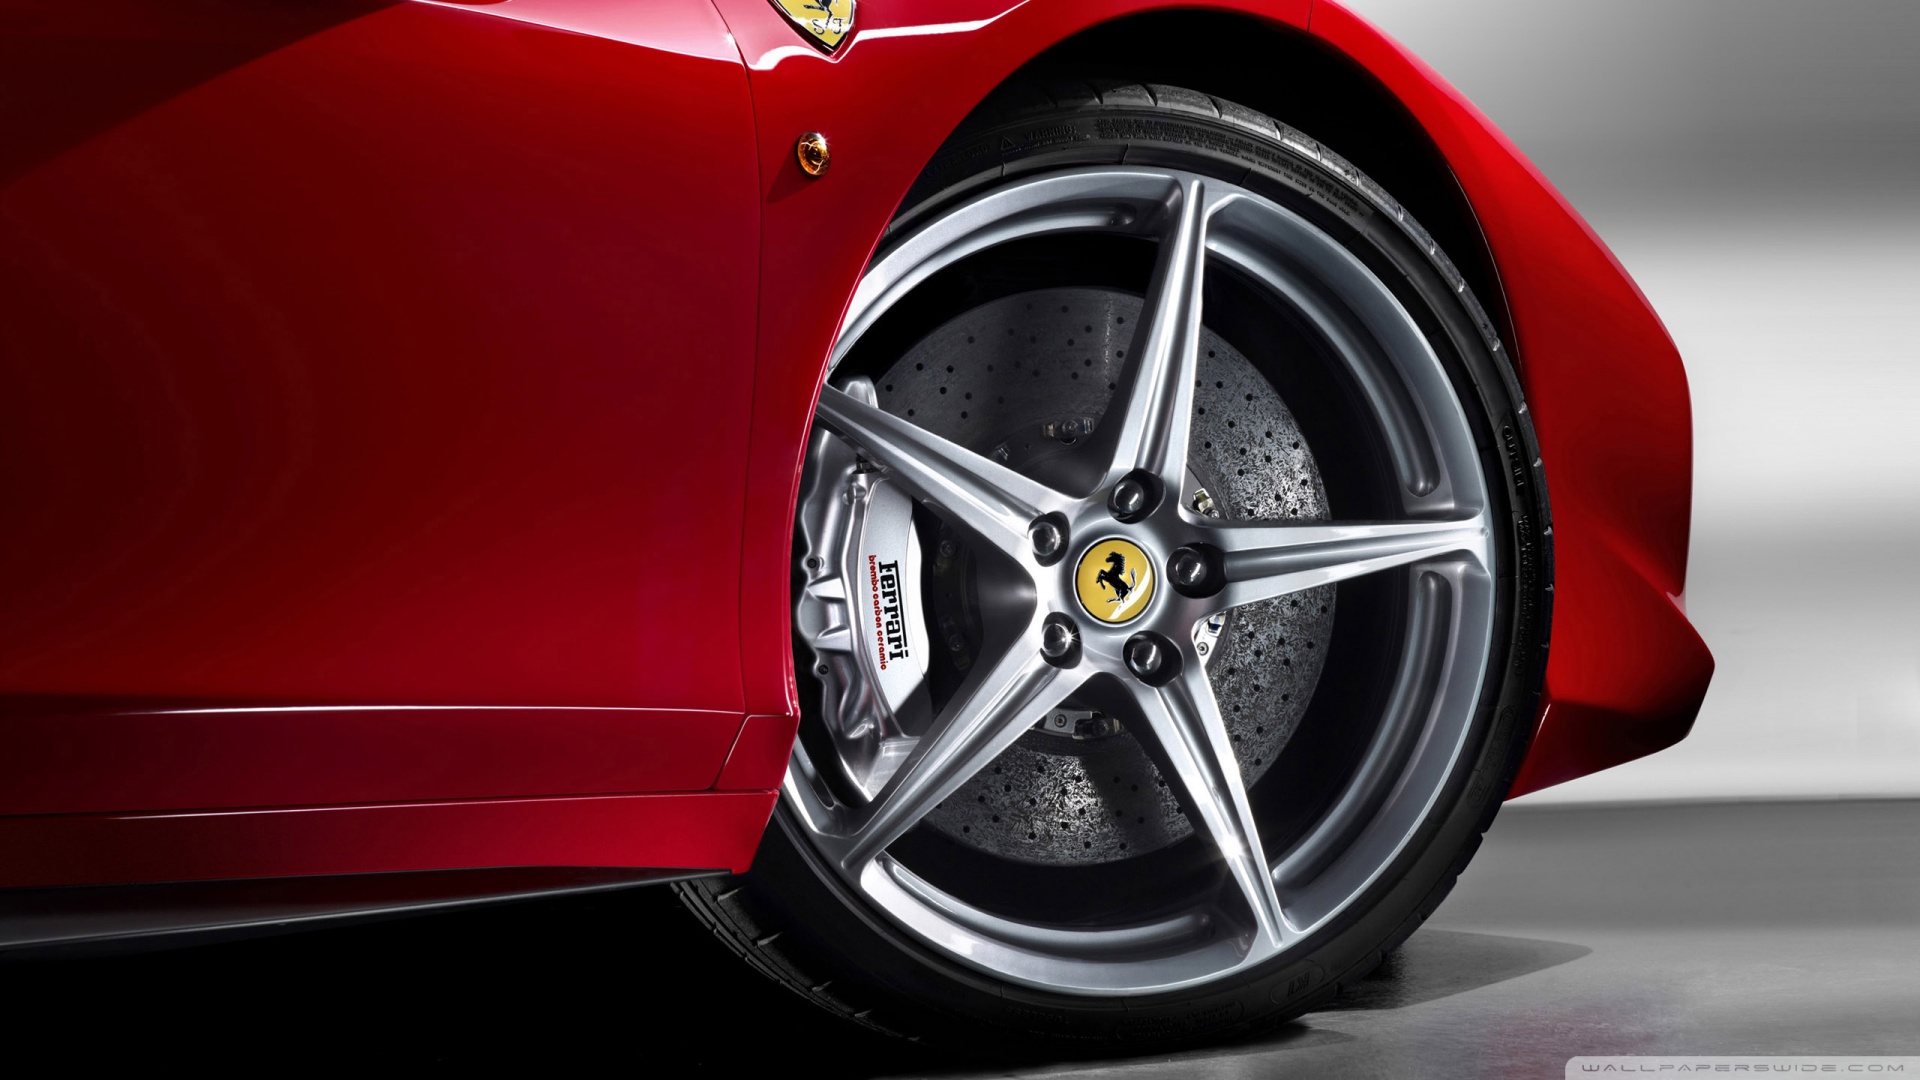 Nice looking Ferrari Wheel picture